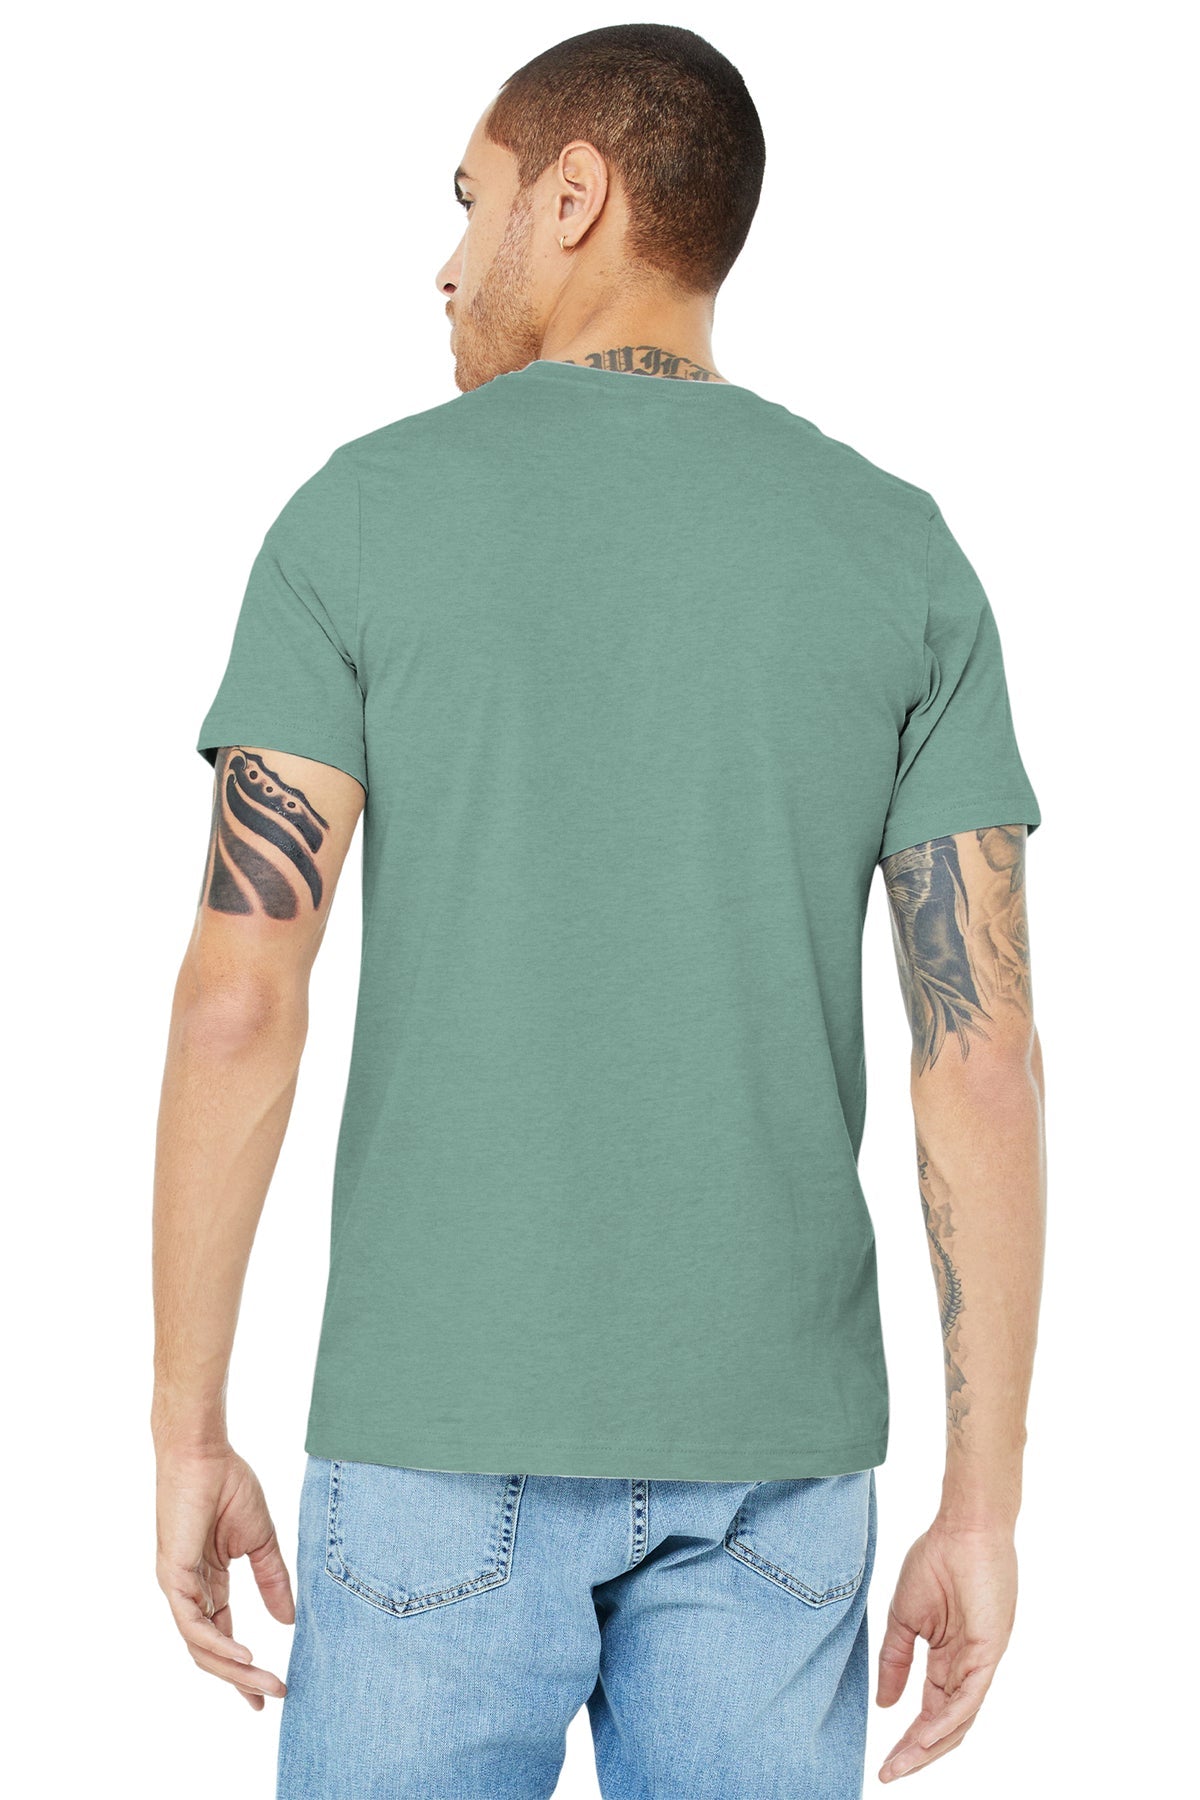 bella + canvas unisex jersey short sleeve t-shirt 3001c hthr dusty blue